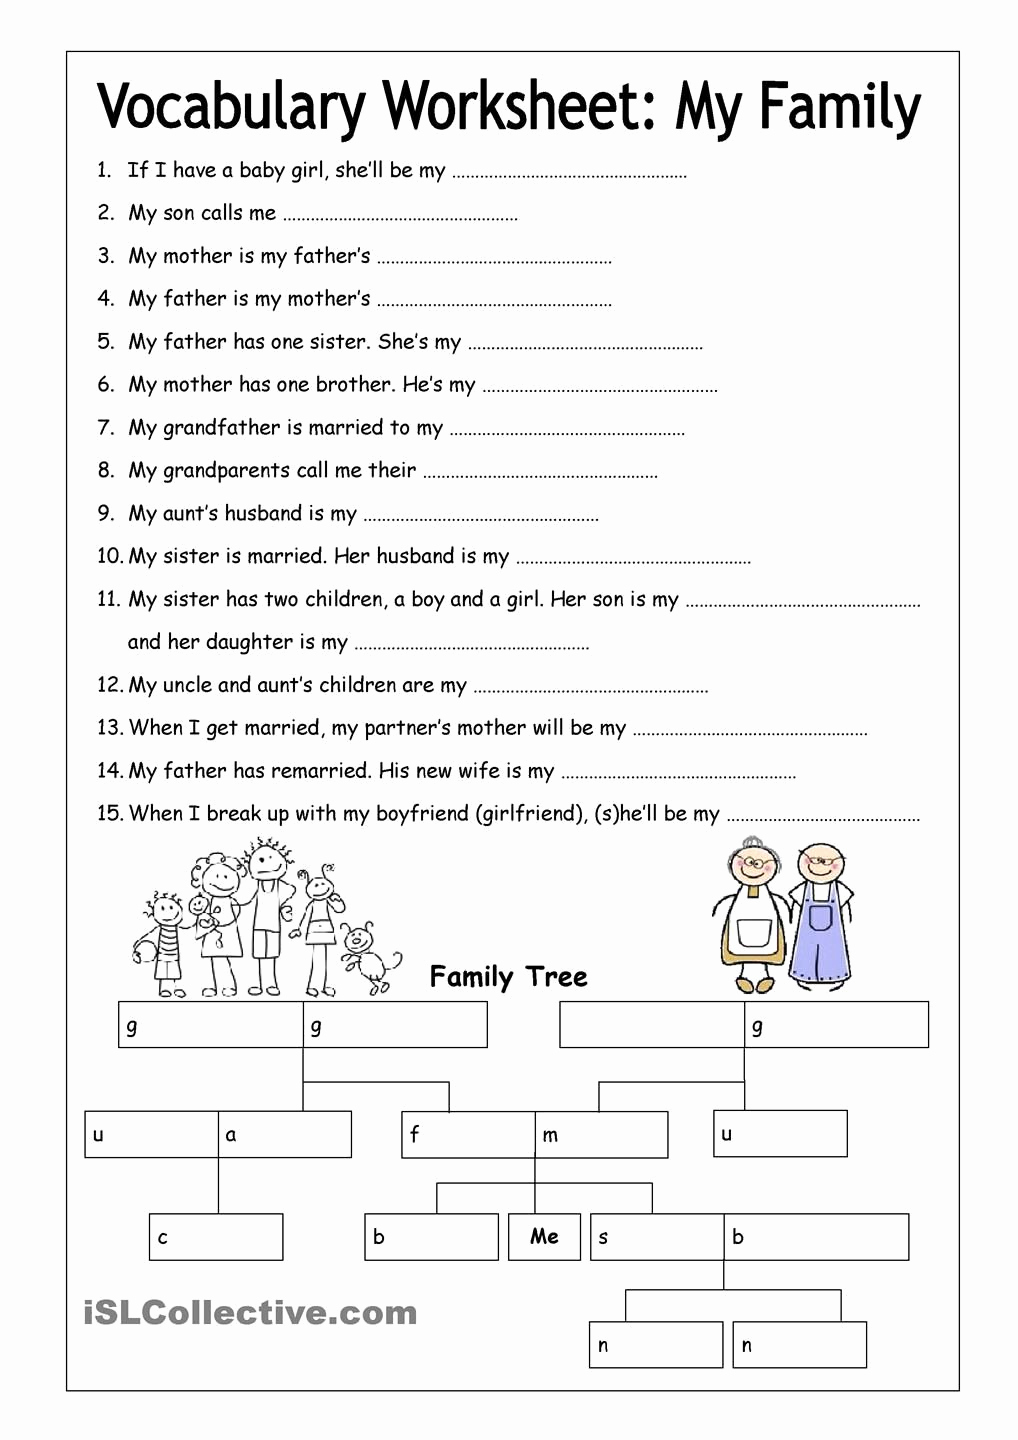 Family Tree Worksheet Printable Best Of Vocabulary Worksheet My Family Medium